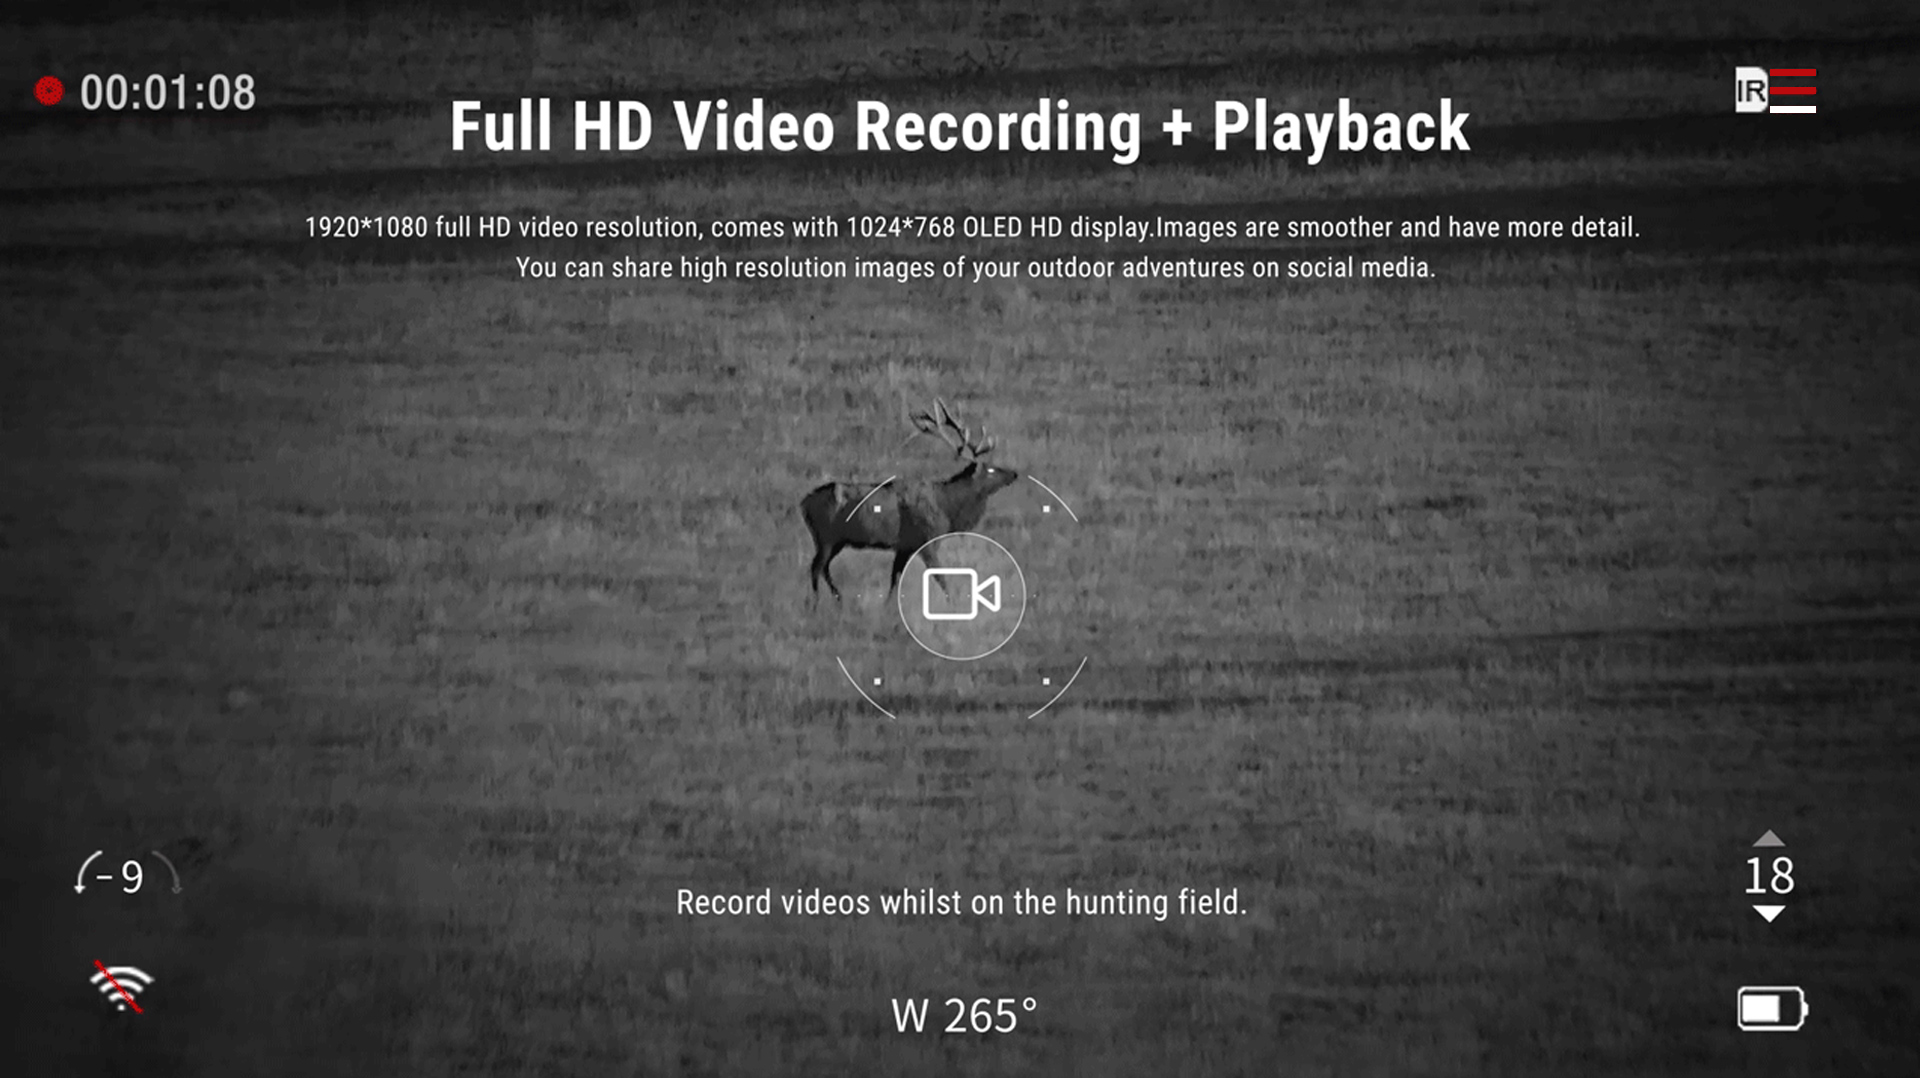 NV008S full hd video recording playback